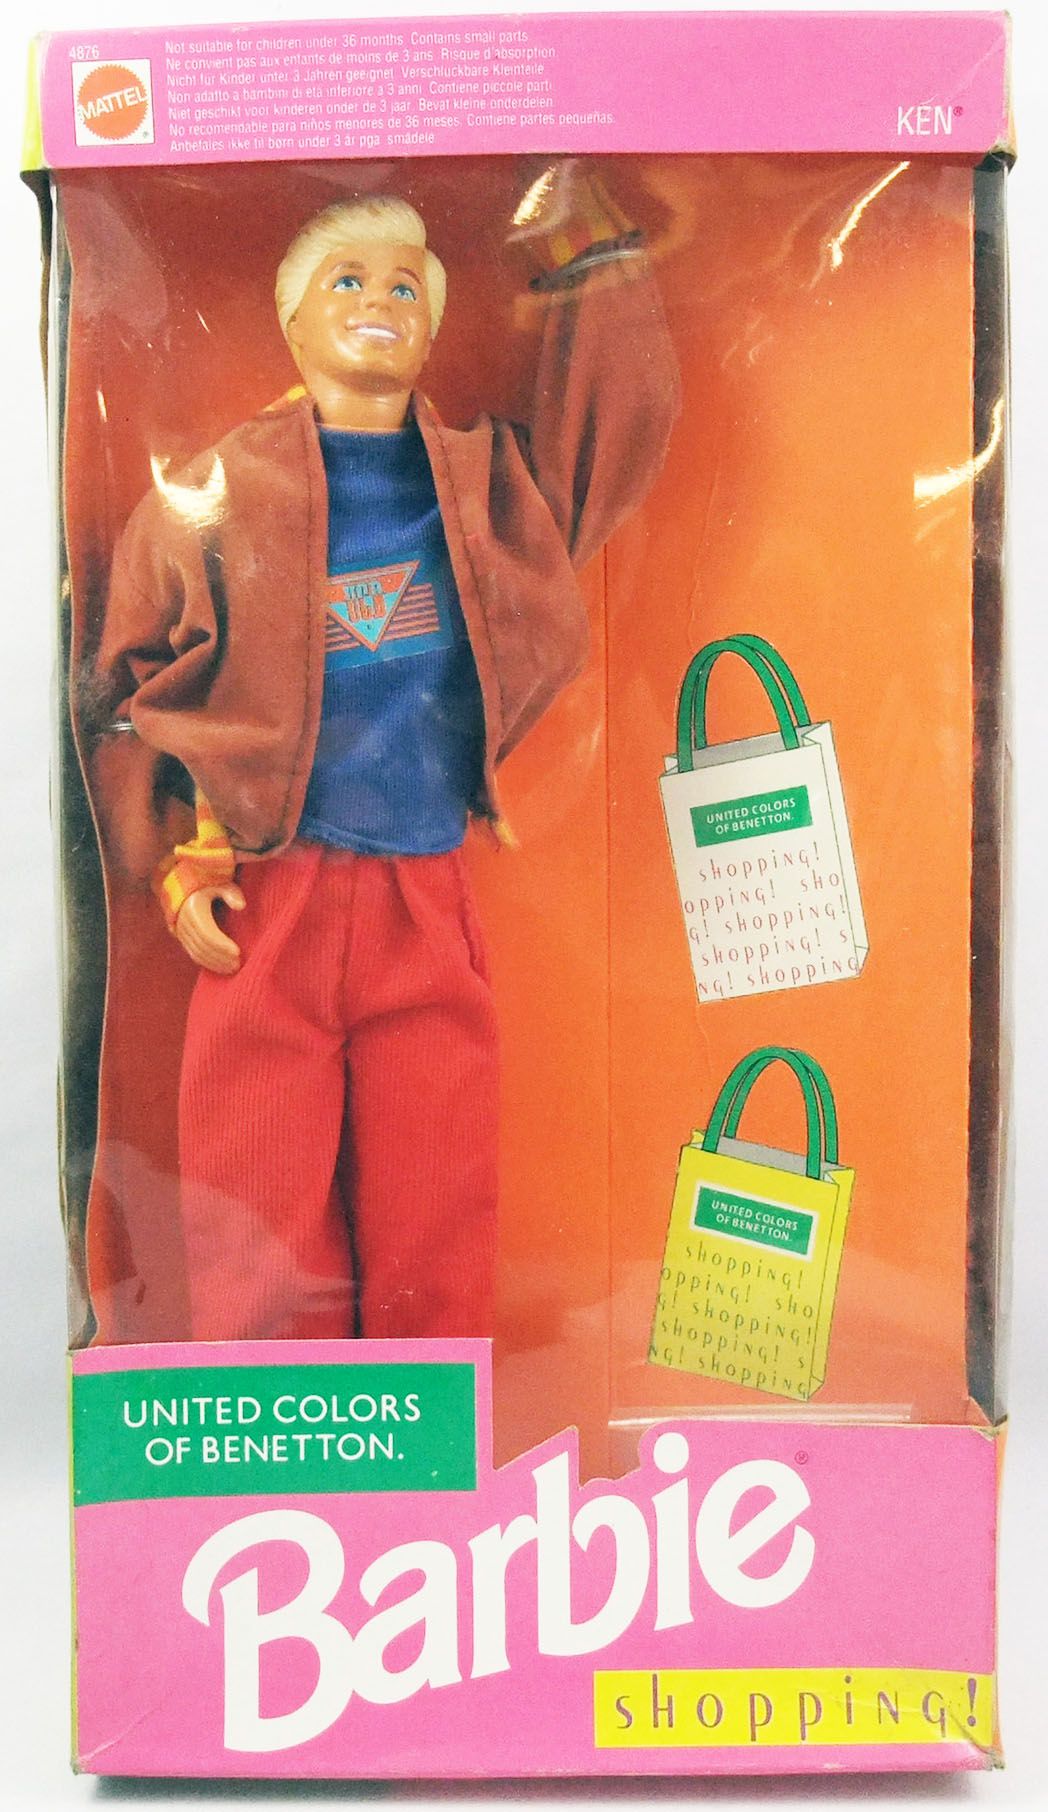 Monteur goochelaar onenigheid Barbie - United Colors of Benetton Shopping! Ken - Mattel 1991 (ref.4876)